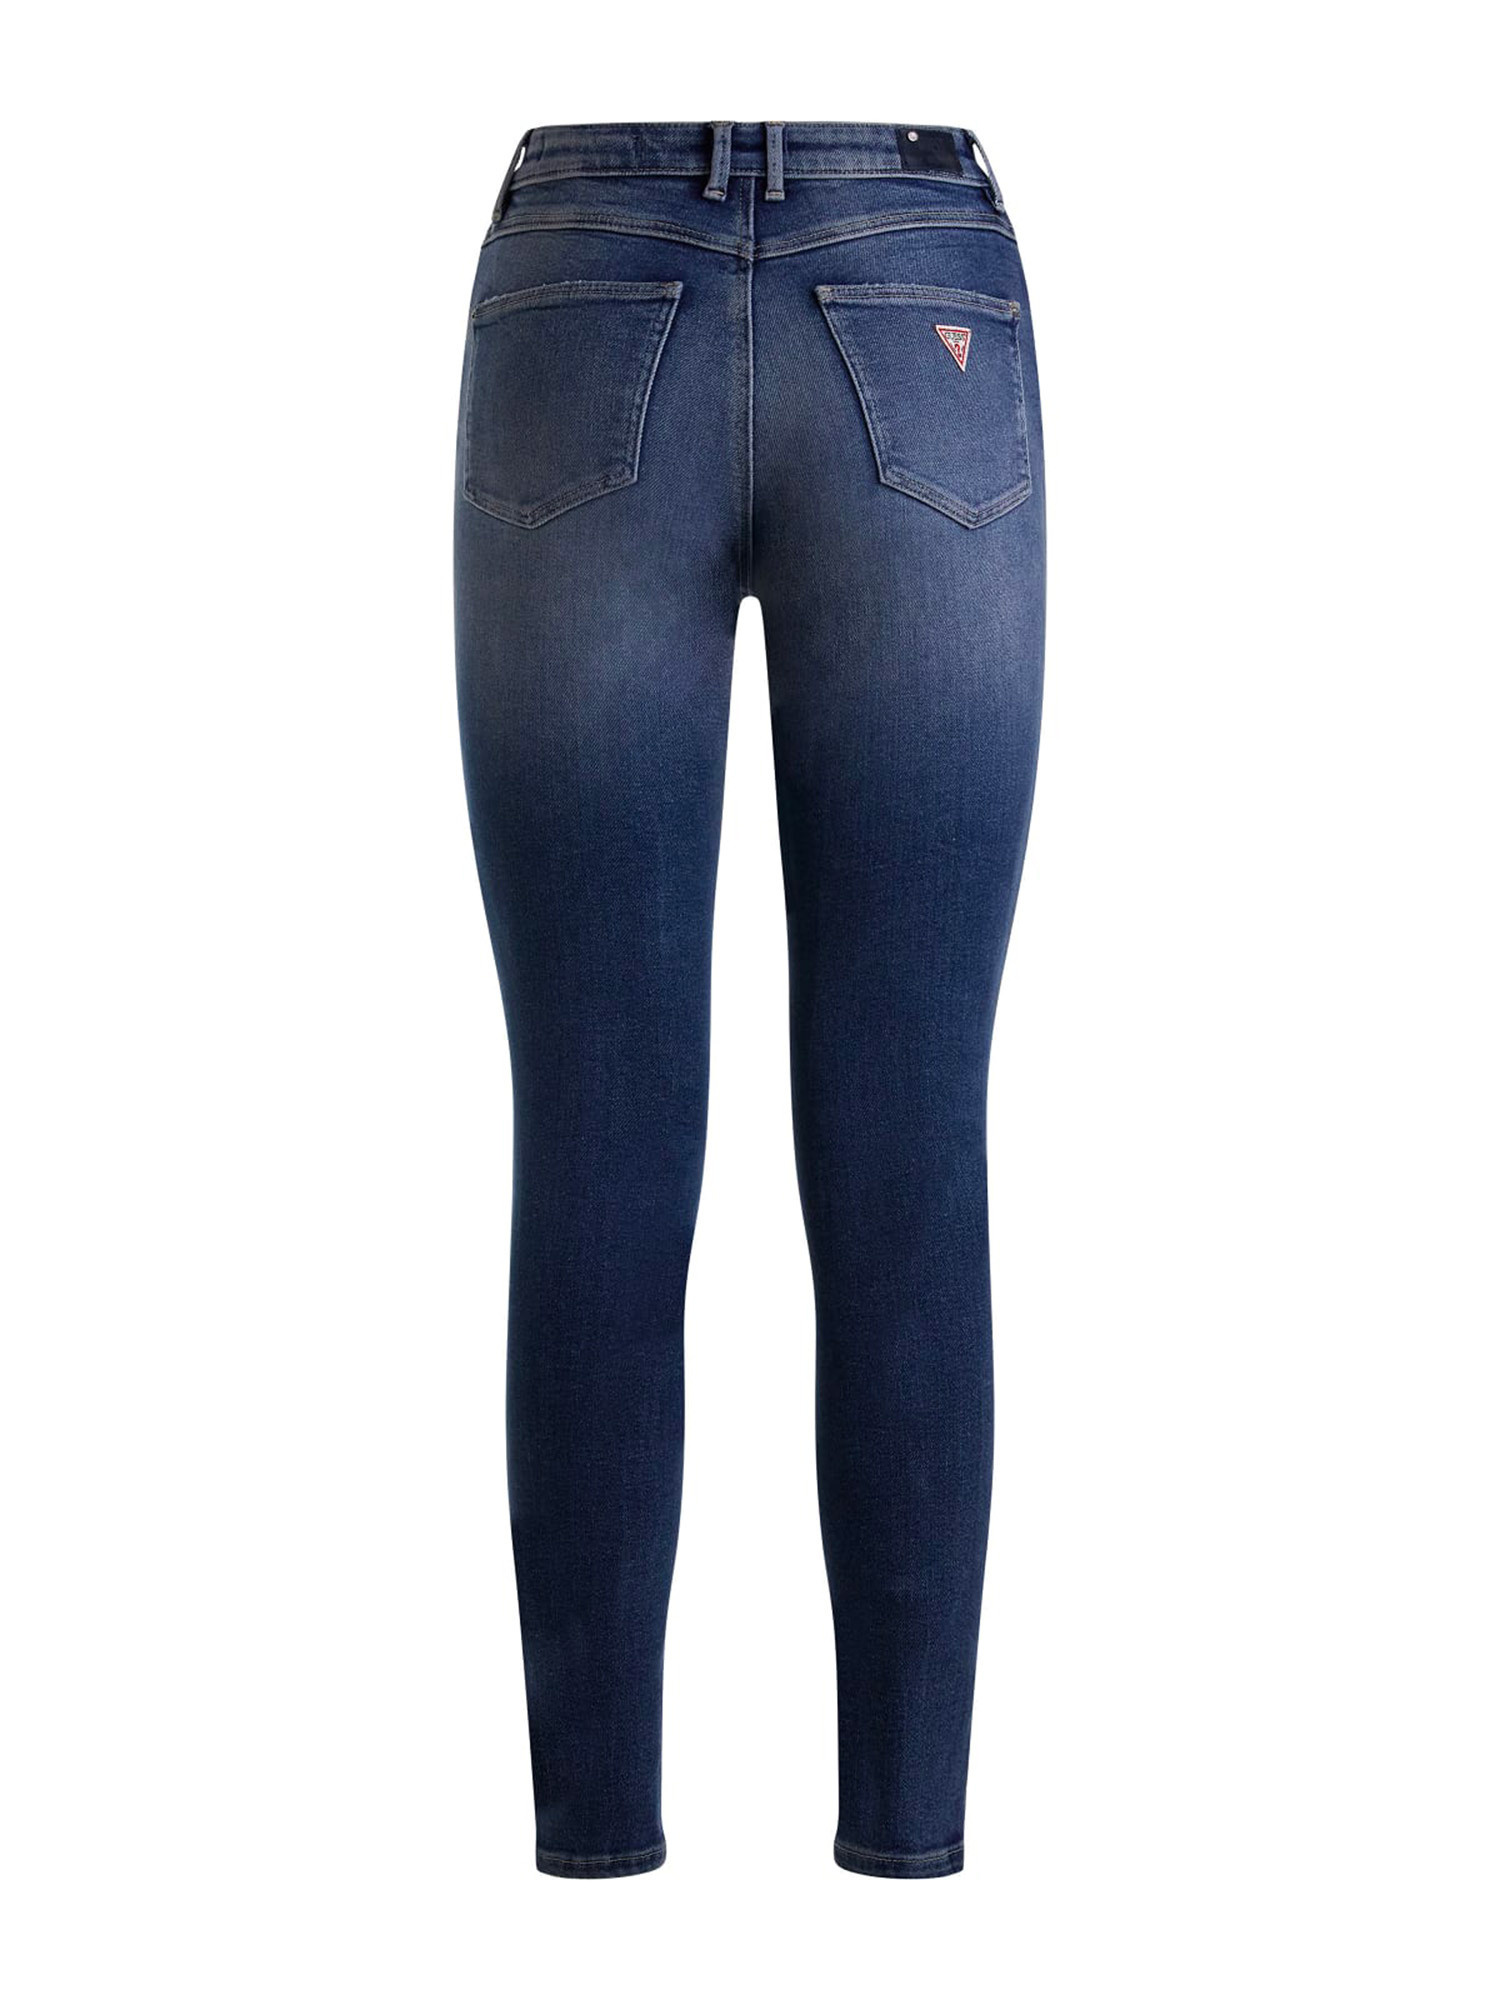 Guess - Jeans 5 tasche skinny, Denim, large image number 1